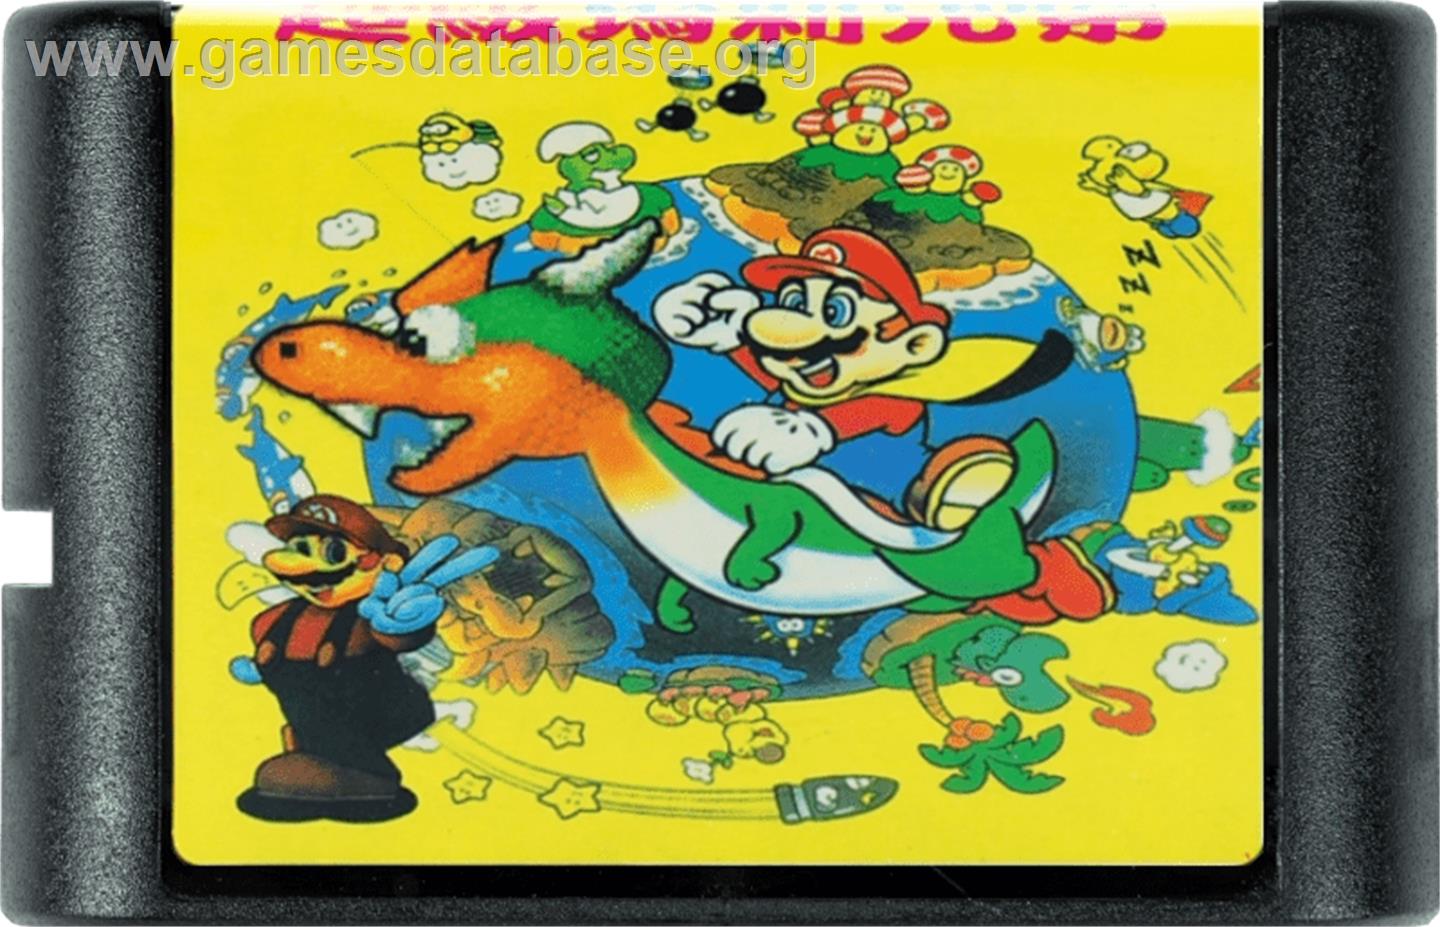 Super Mario World - Sega Genesis - Artwork - Cartridge